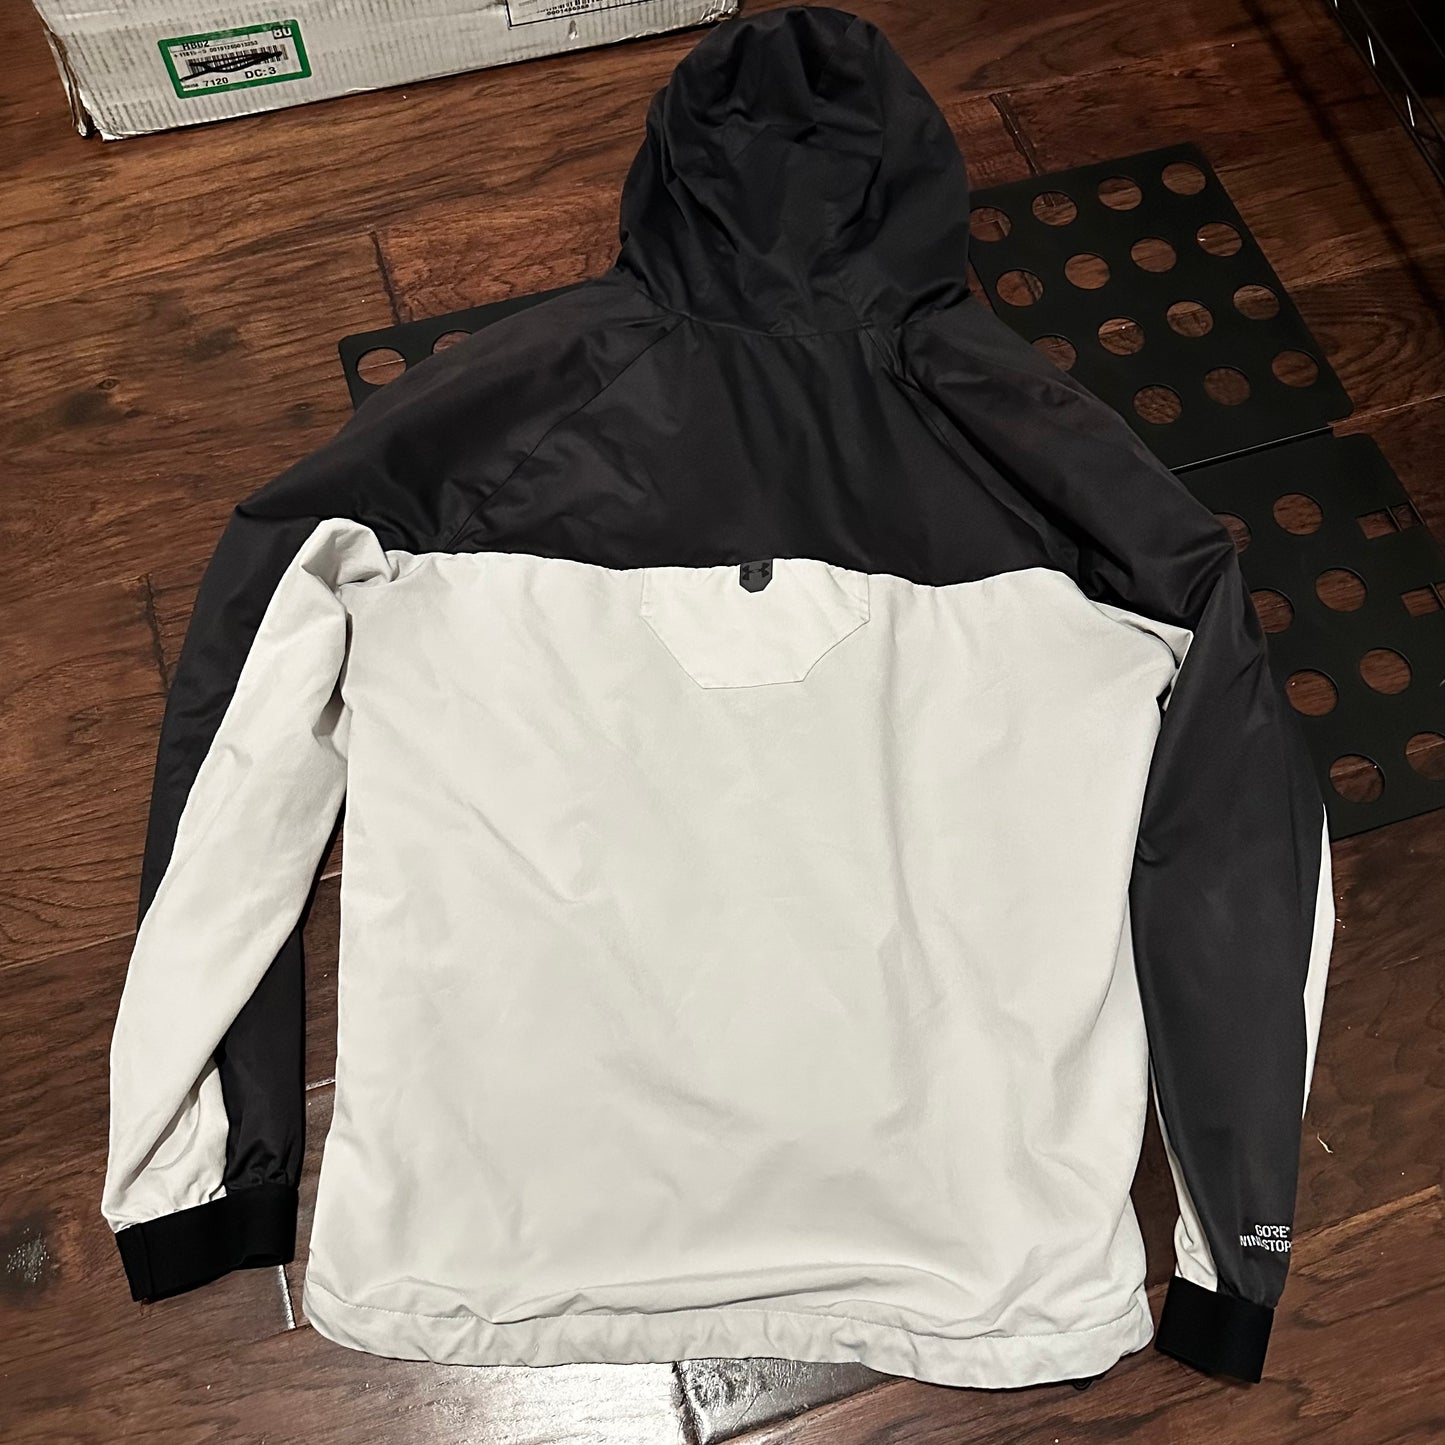 Under armor black and white Rain jacket - XL